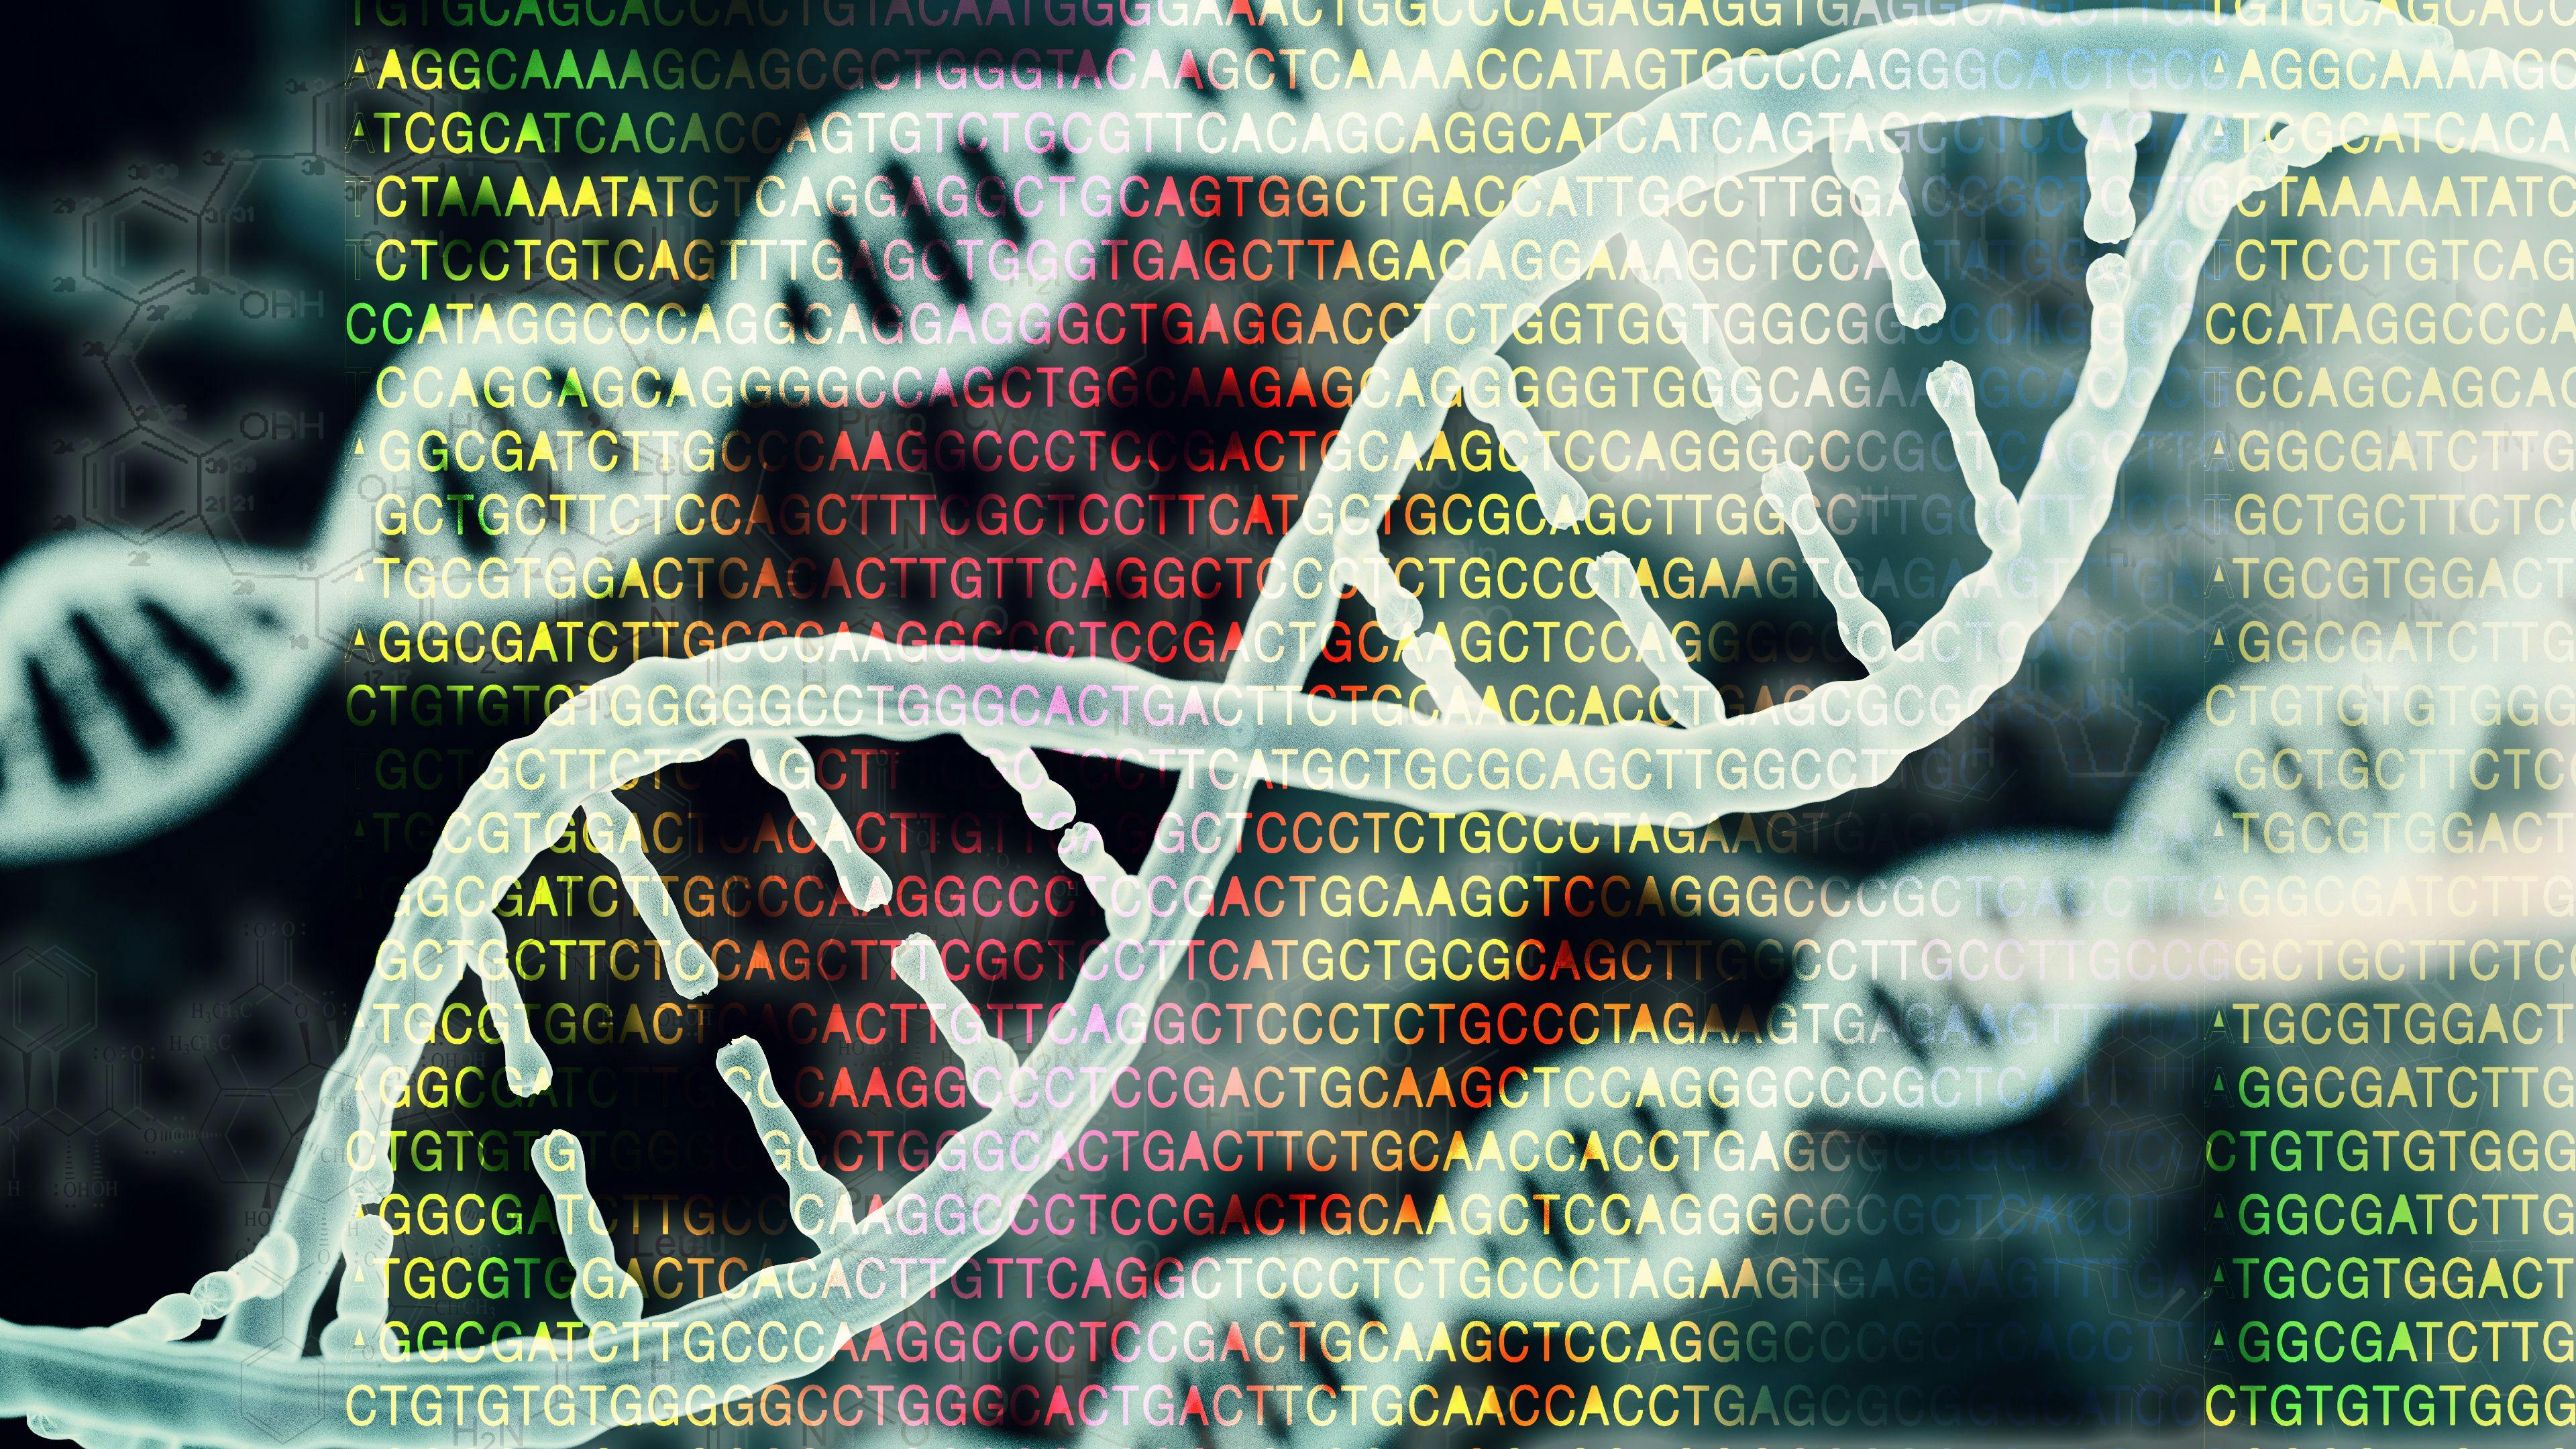 Genome Sequencing Model | image credit: catalin - stock.adobe.com